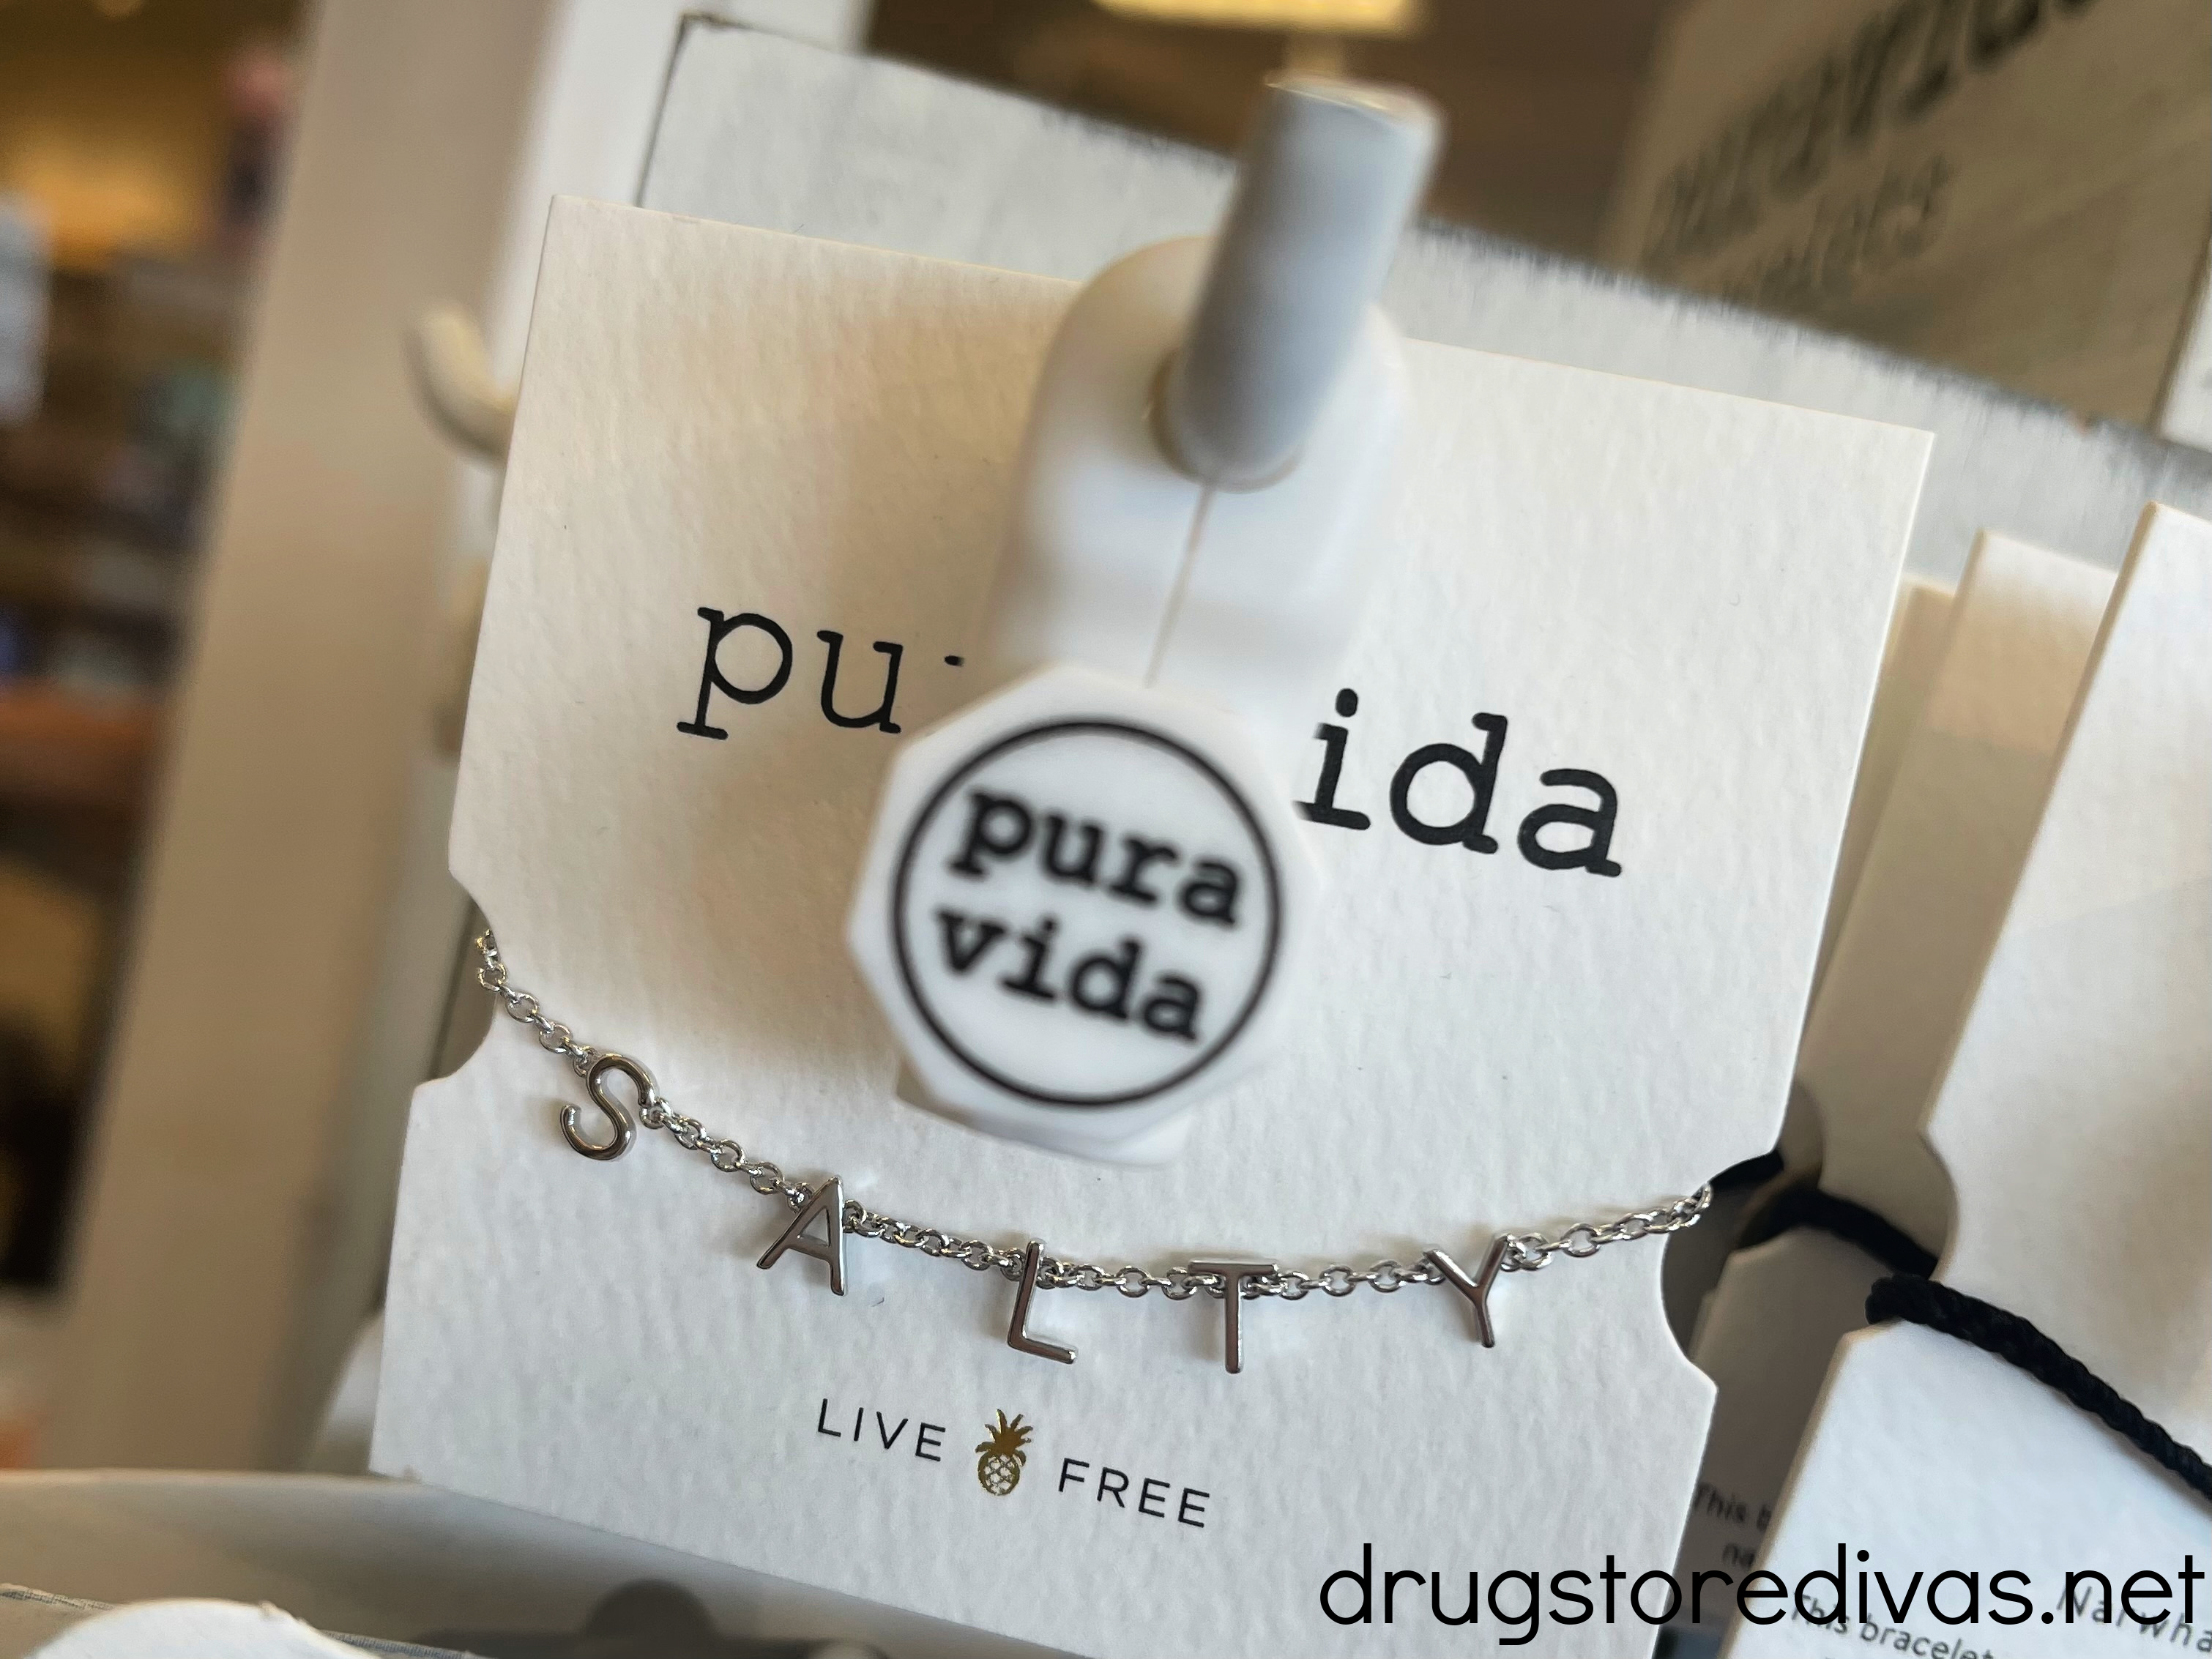 A Pura Vida bracelet on the shelf.